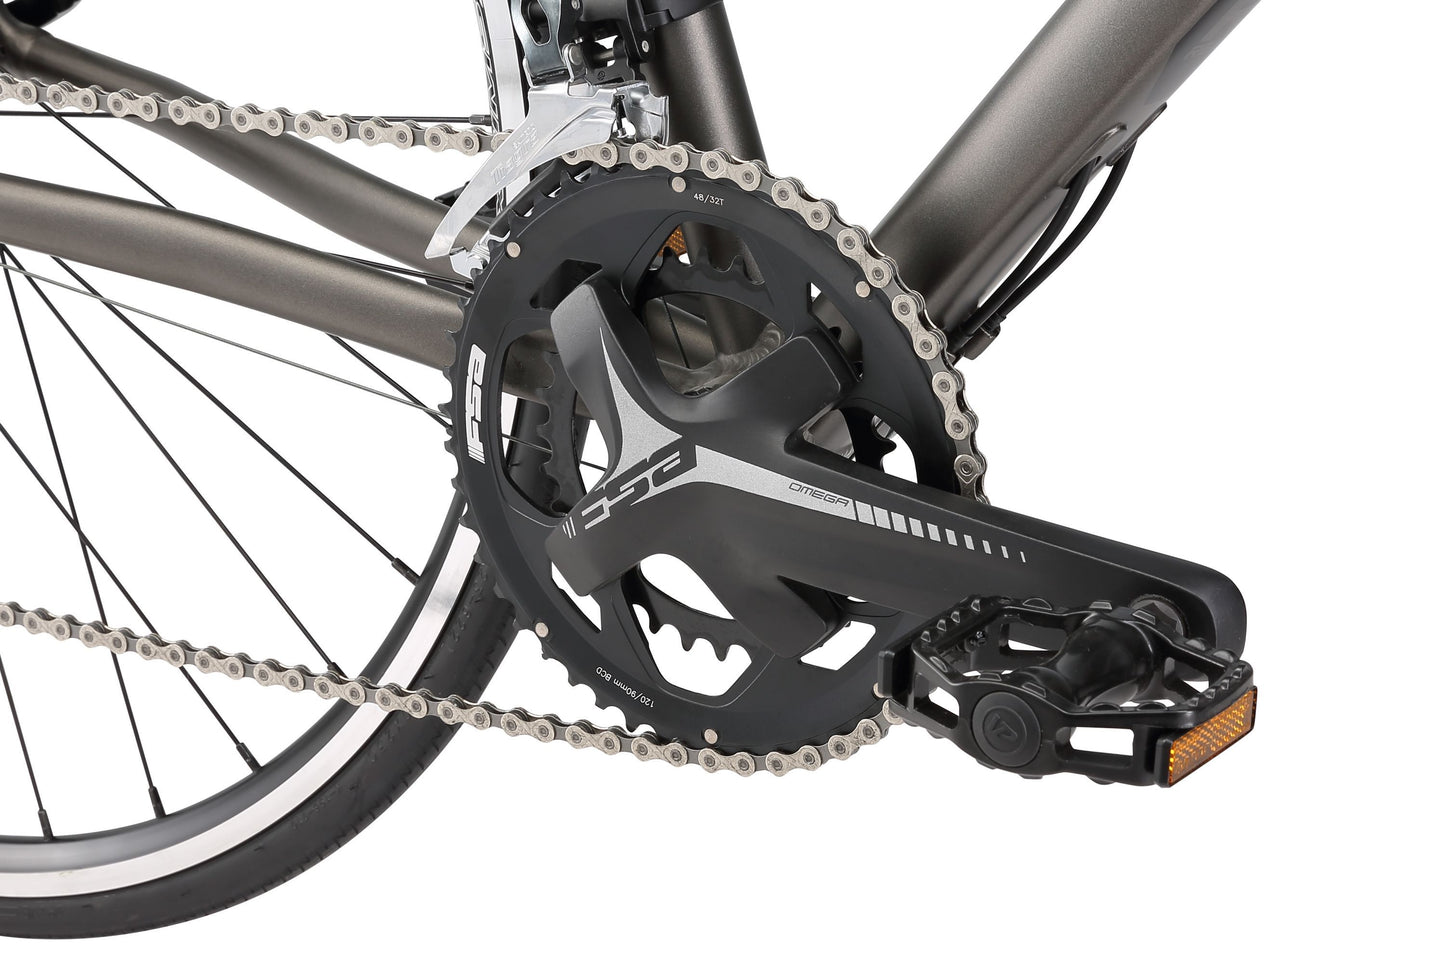 Falco Sport Road Bike in Charcoal showing FSA Omega drivetrain and pedal from Reid Cycles Australia